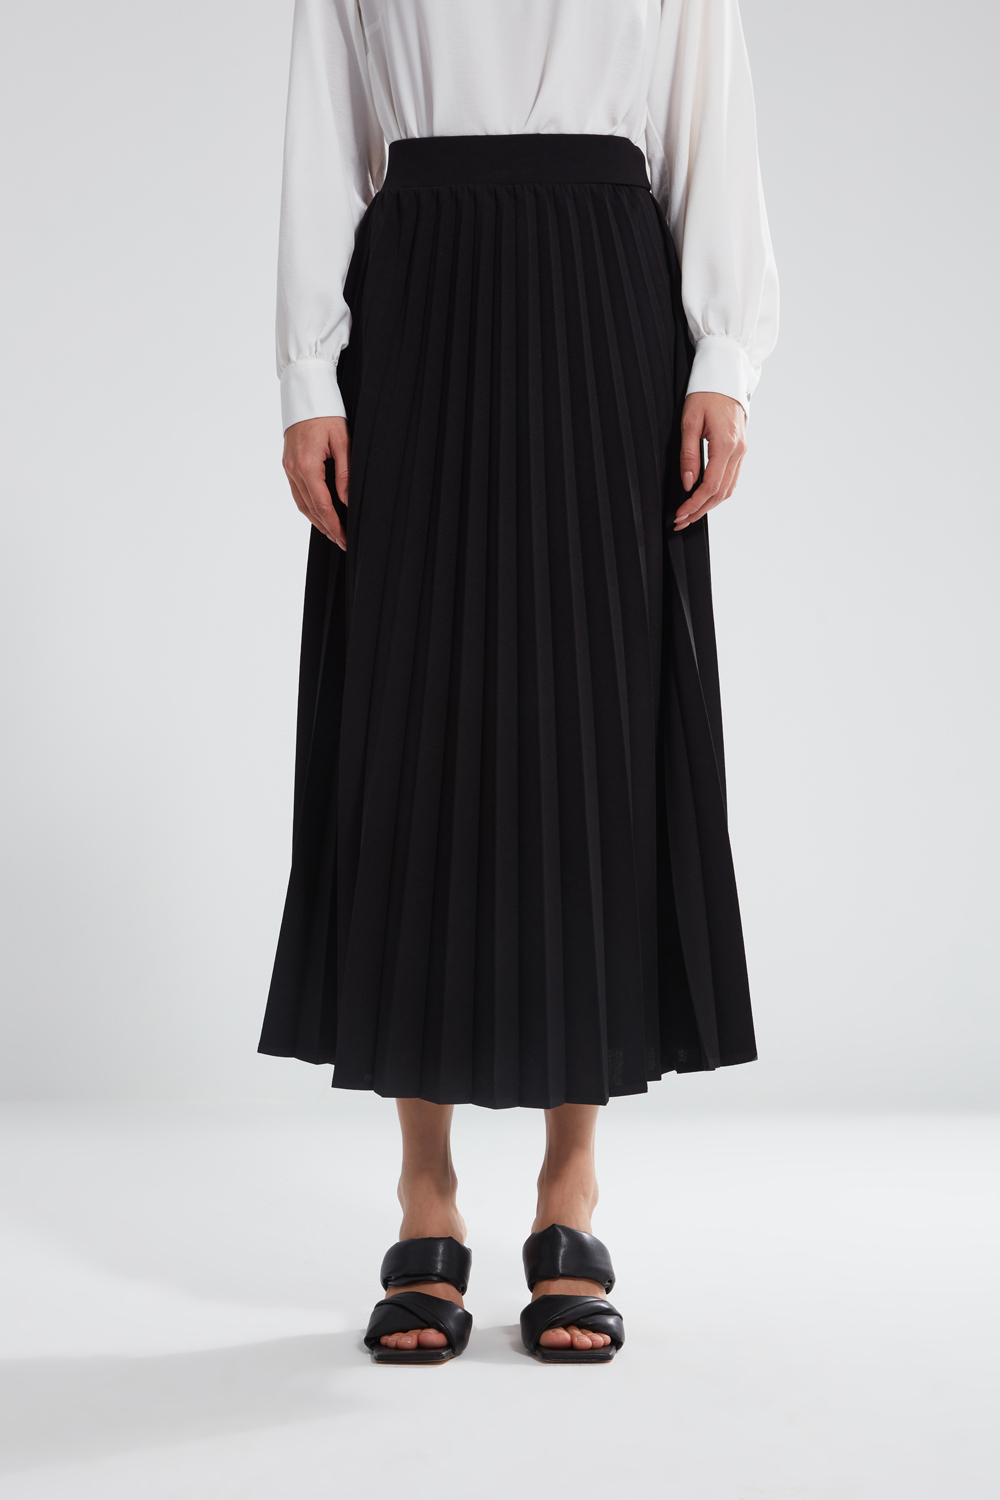 Knitted Crepe Black Pleated Skirt